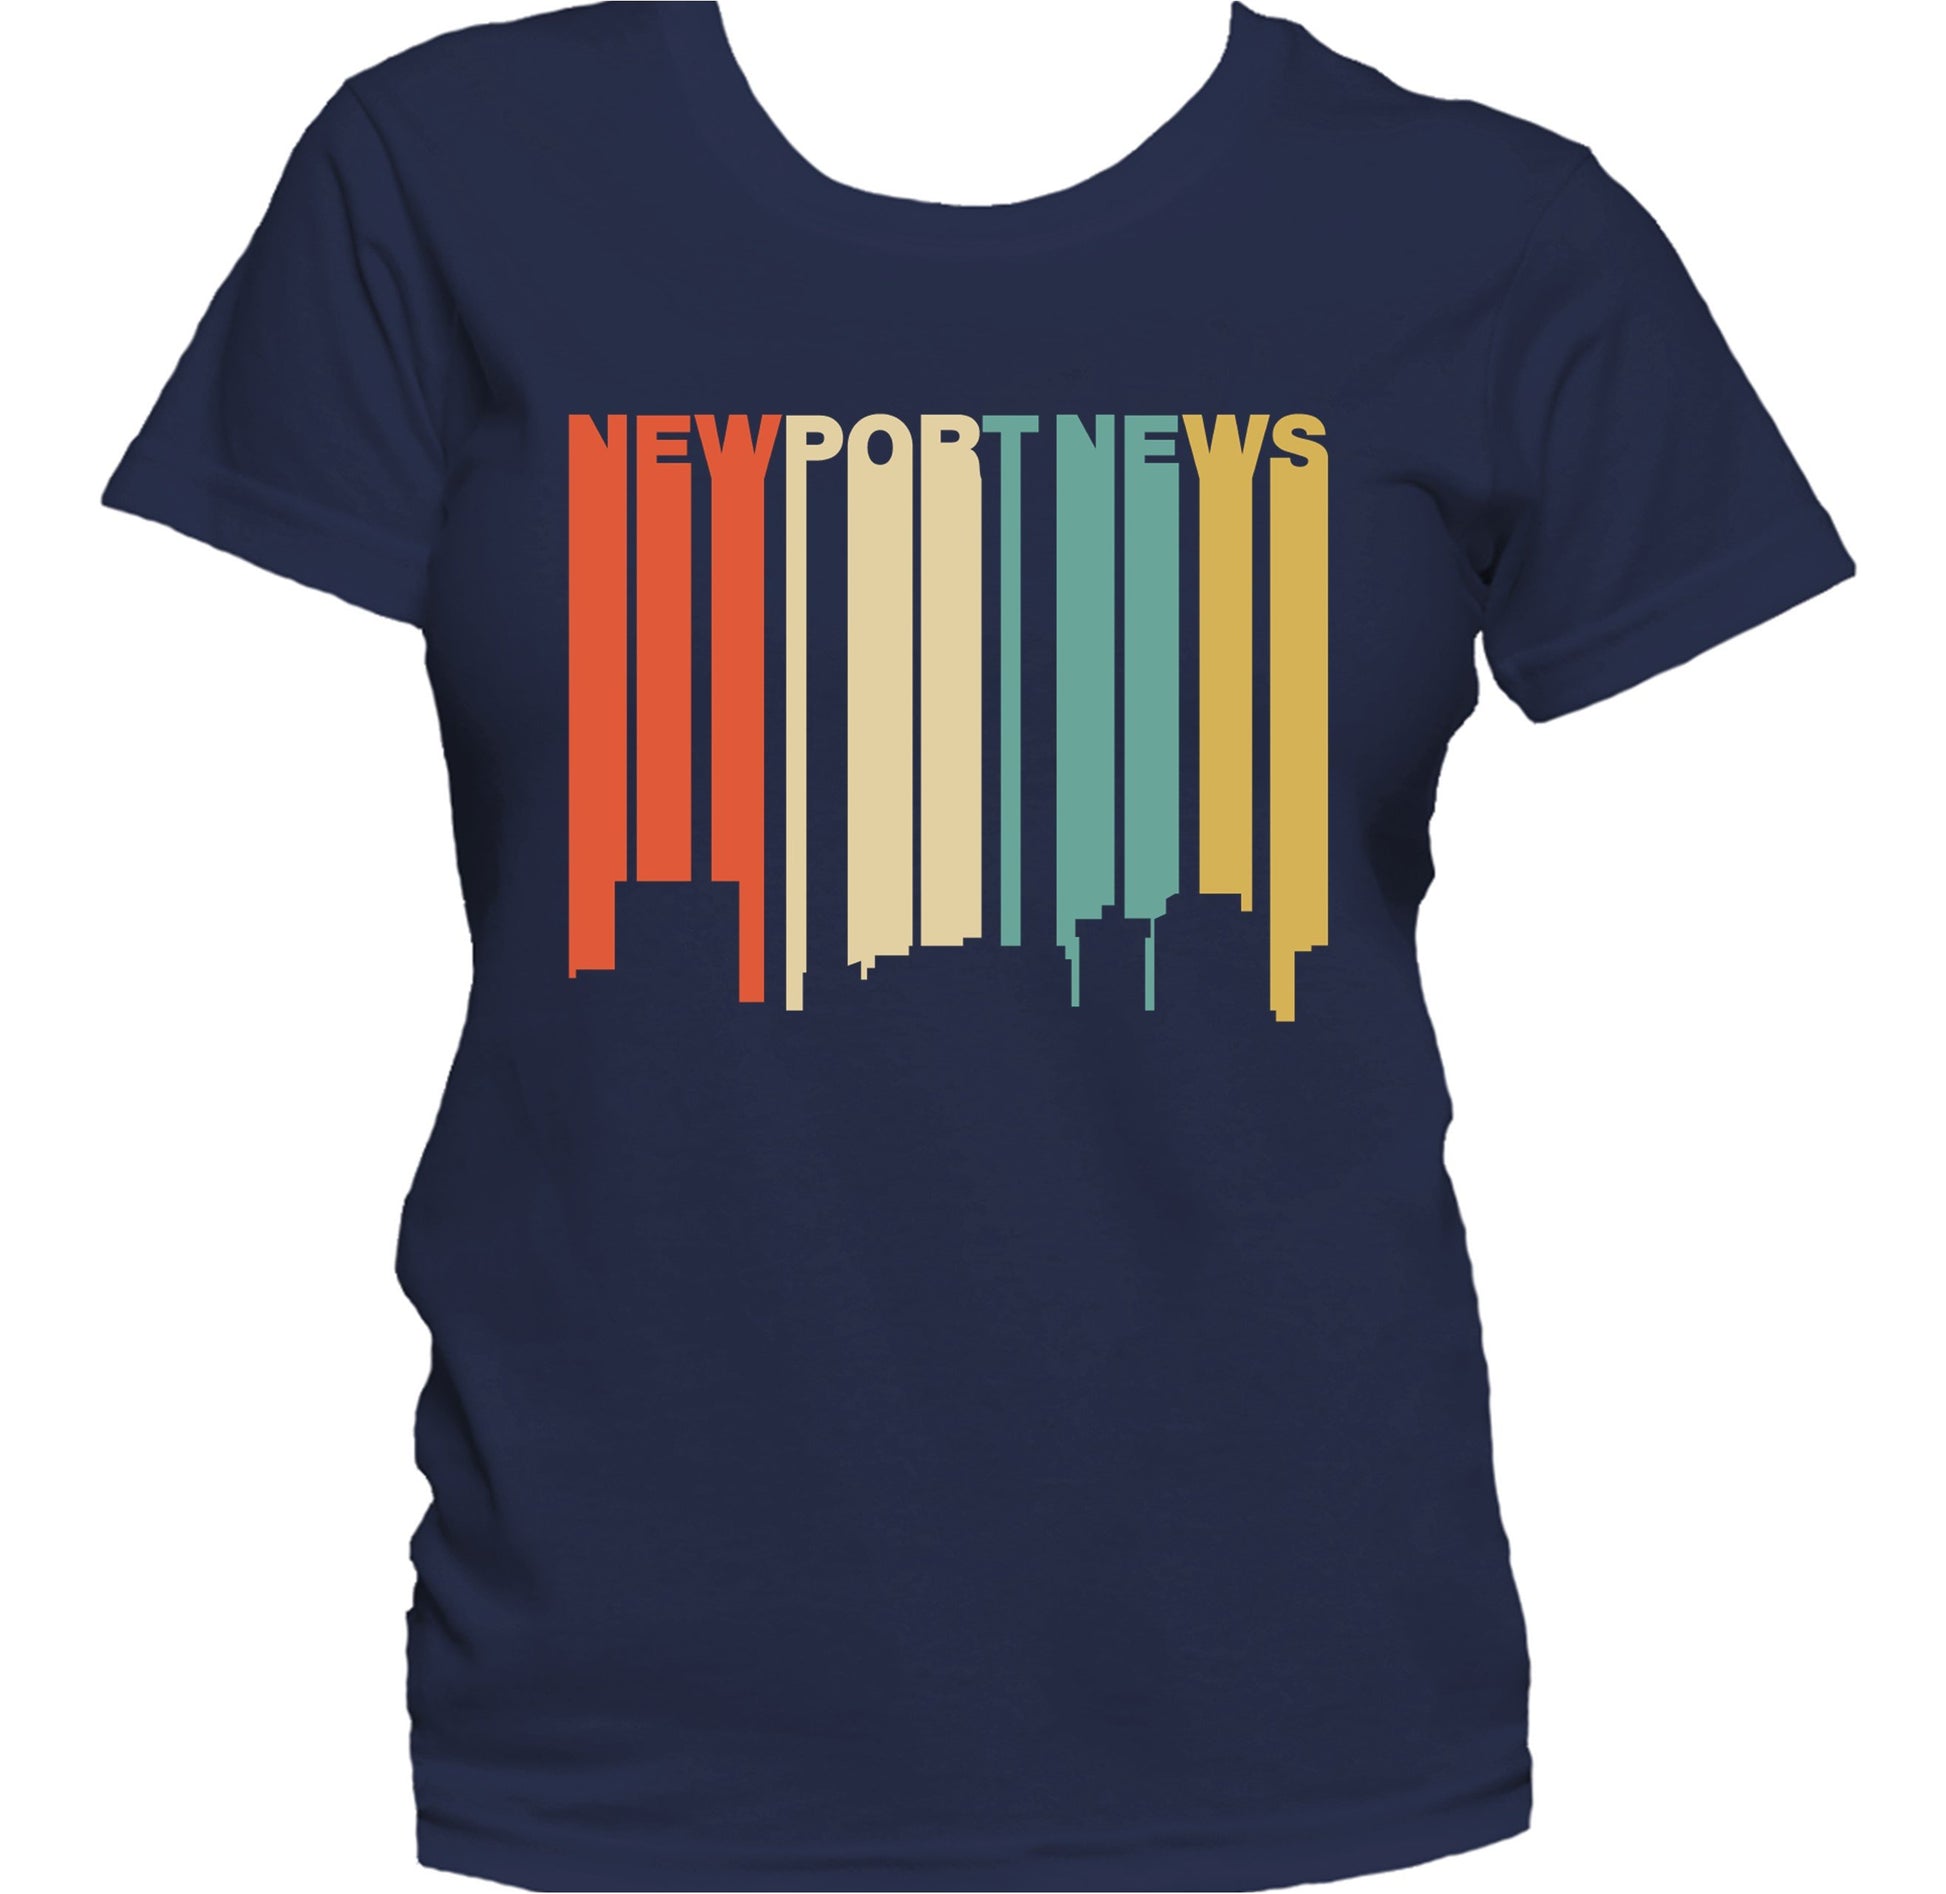 Retro 1970's Style Newport News Virginia Skyline Women's T-Shirt